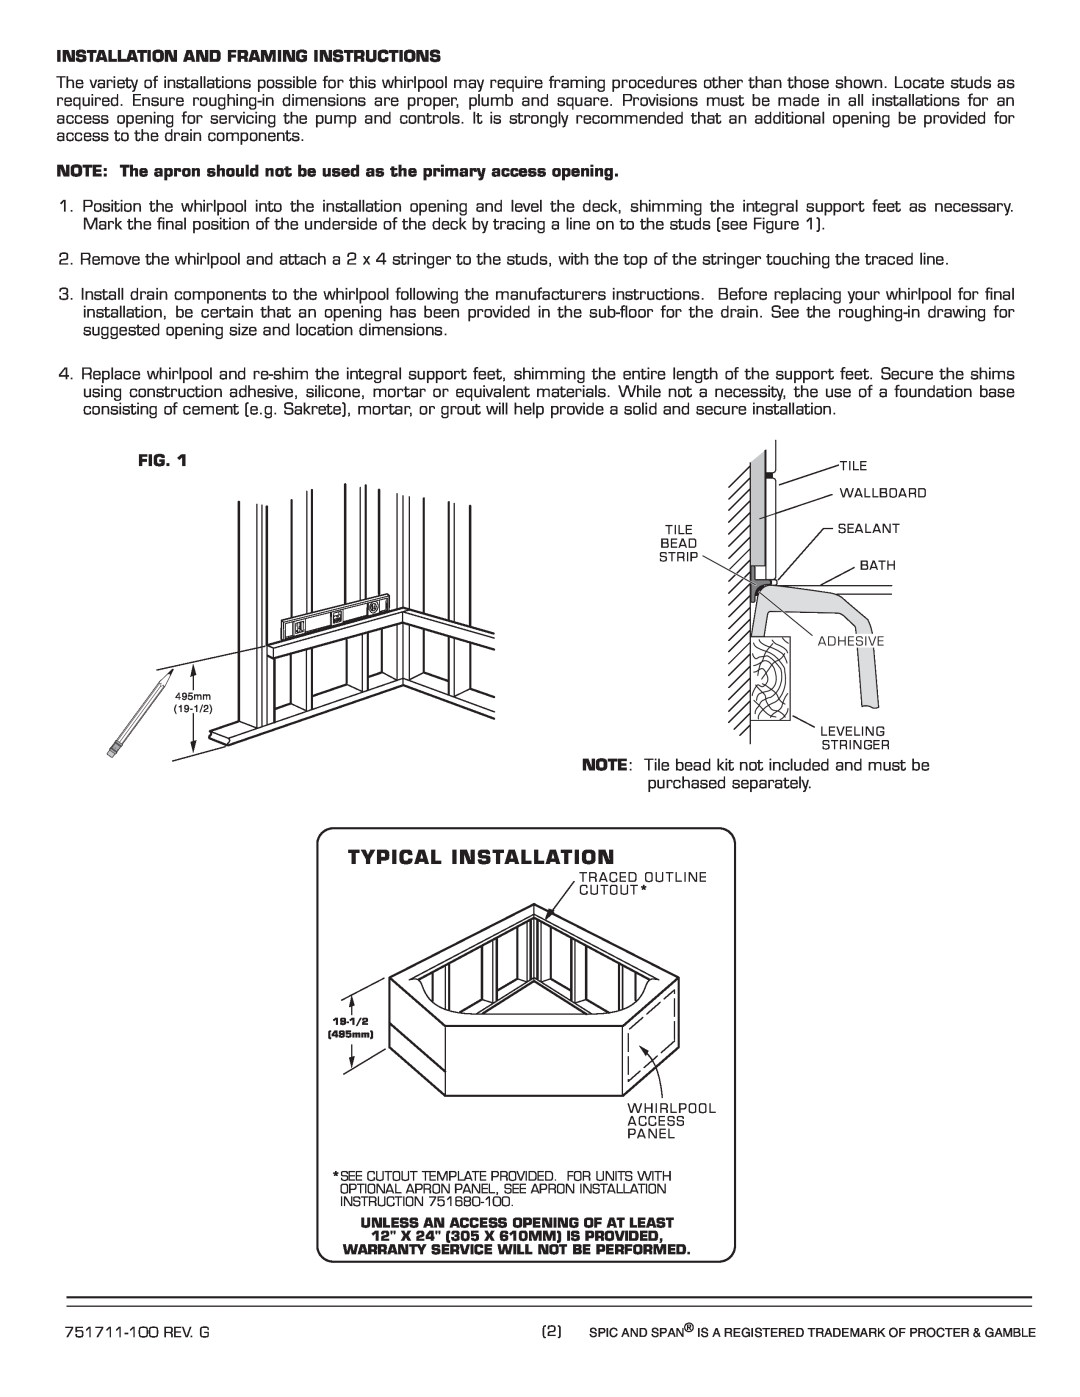 American Standard 751711-100 installation instructions Typical Installation, Installation And Framing Instructions 